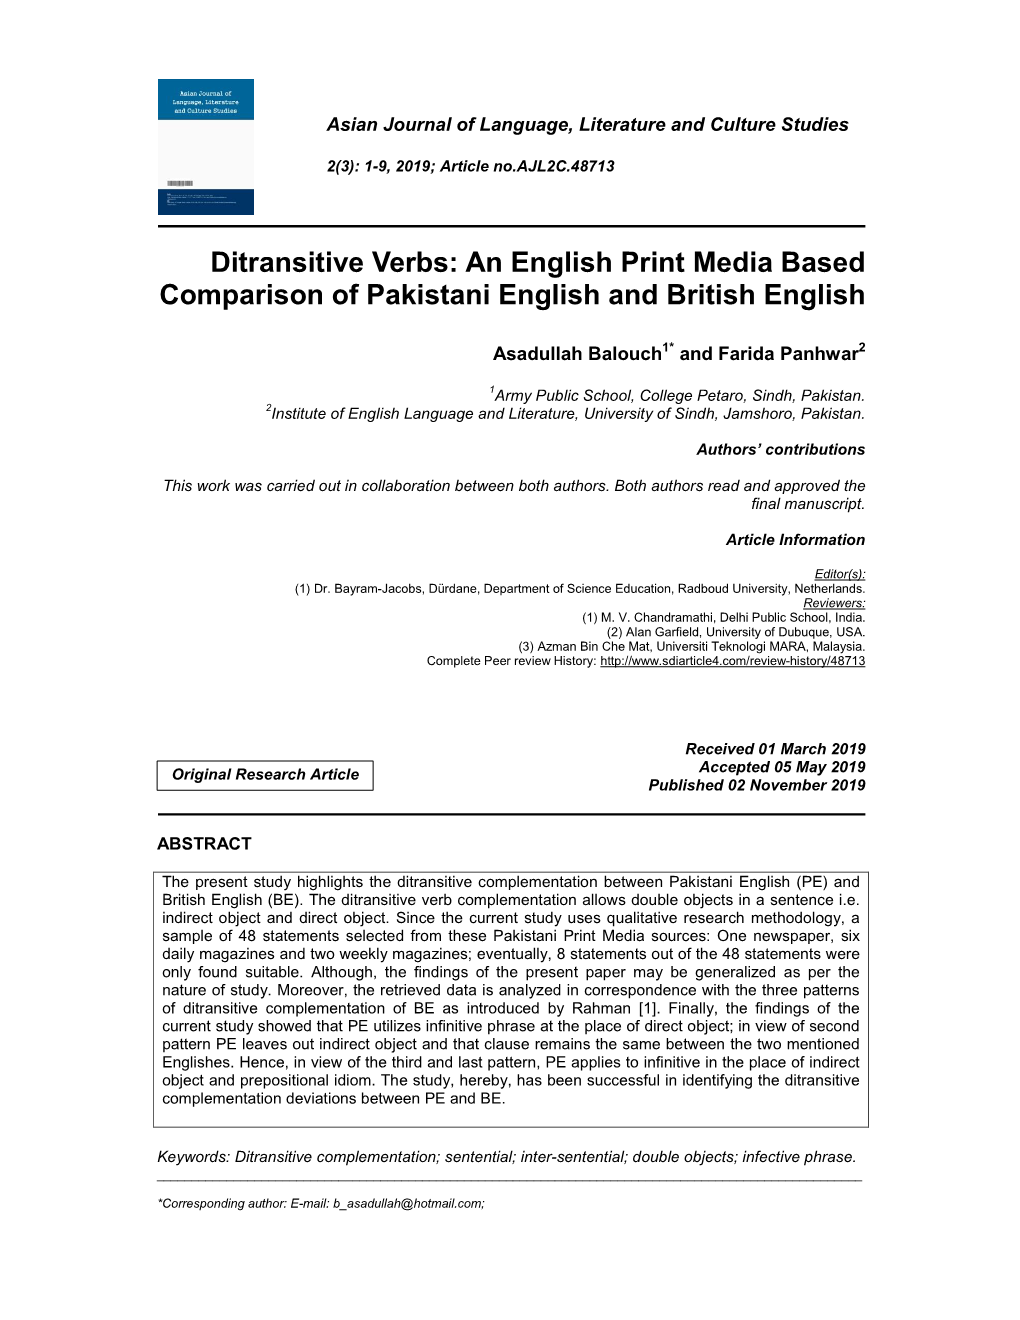 Ditransitive Verbs: an English Print Media Based Comparison of Pakistani English and British English